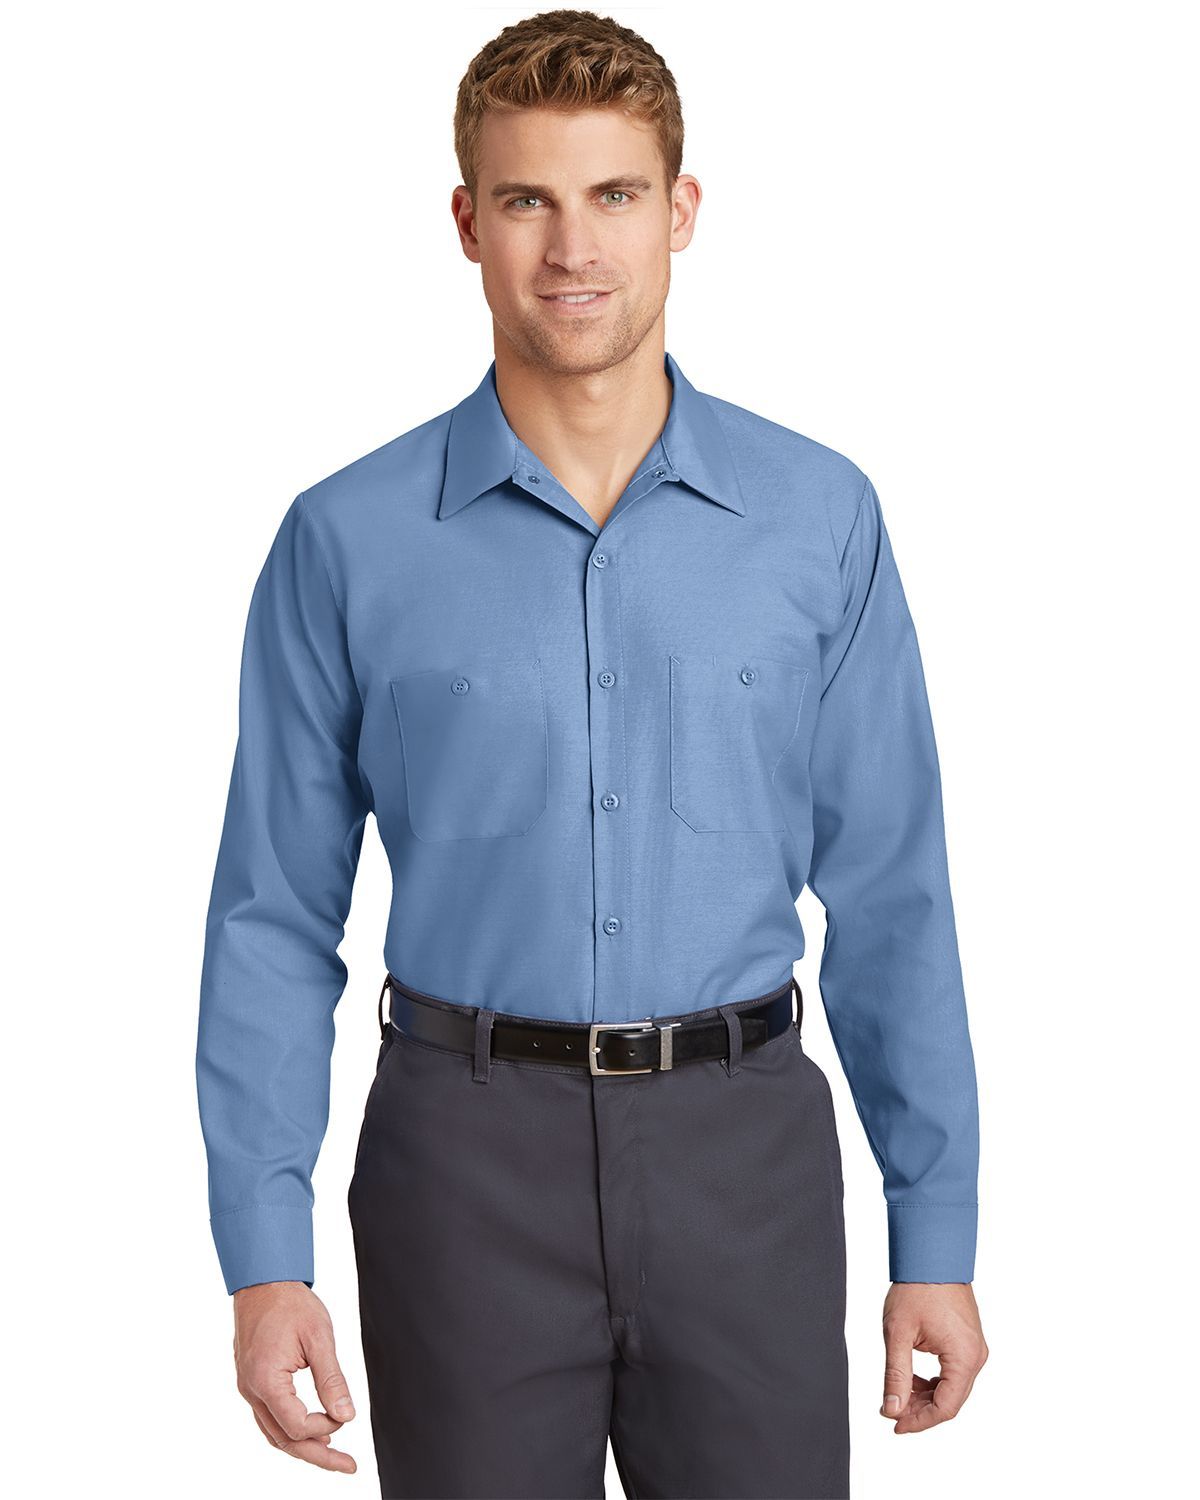 Shop Custom Work Shirts for Men and Women - Logo Work Shirts